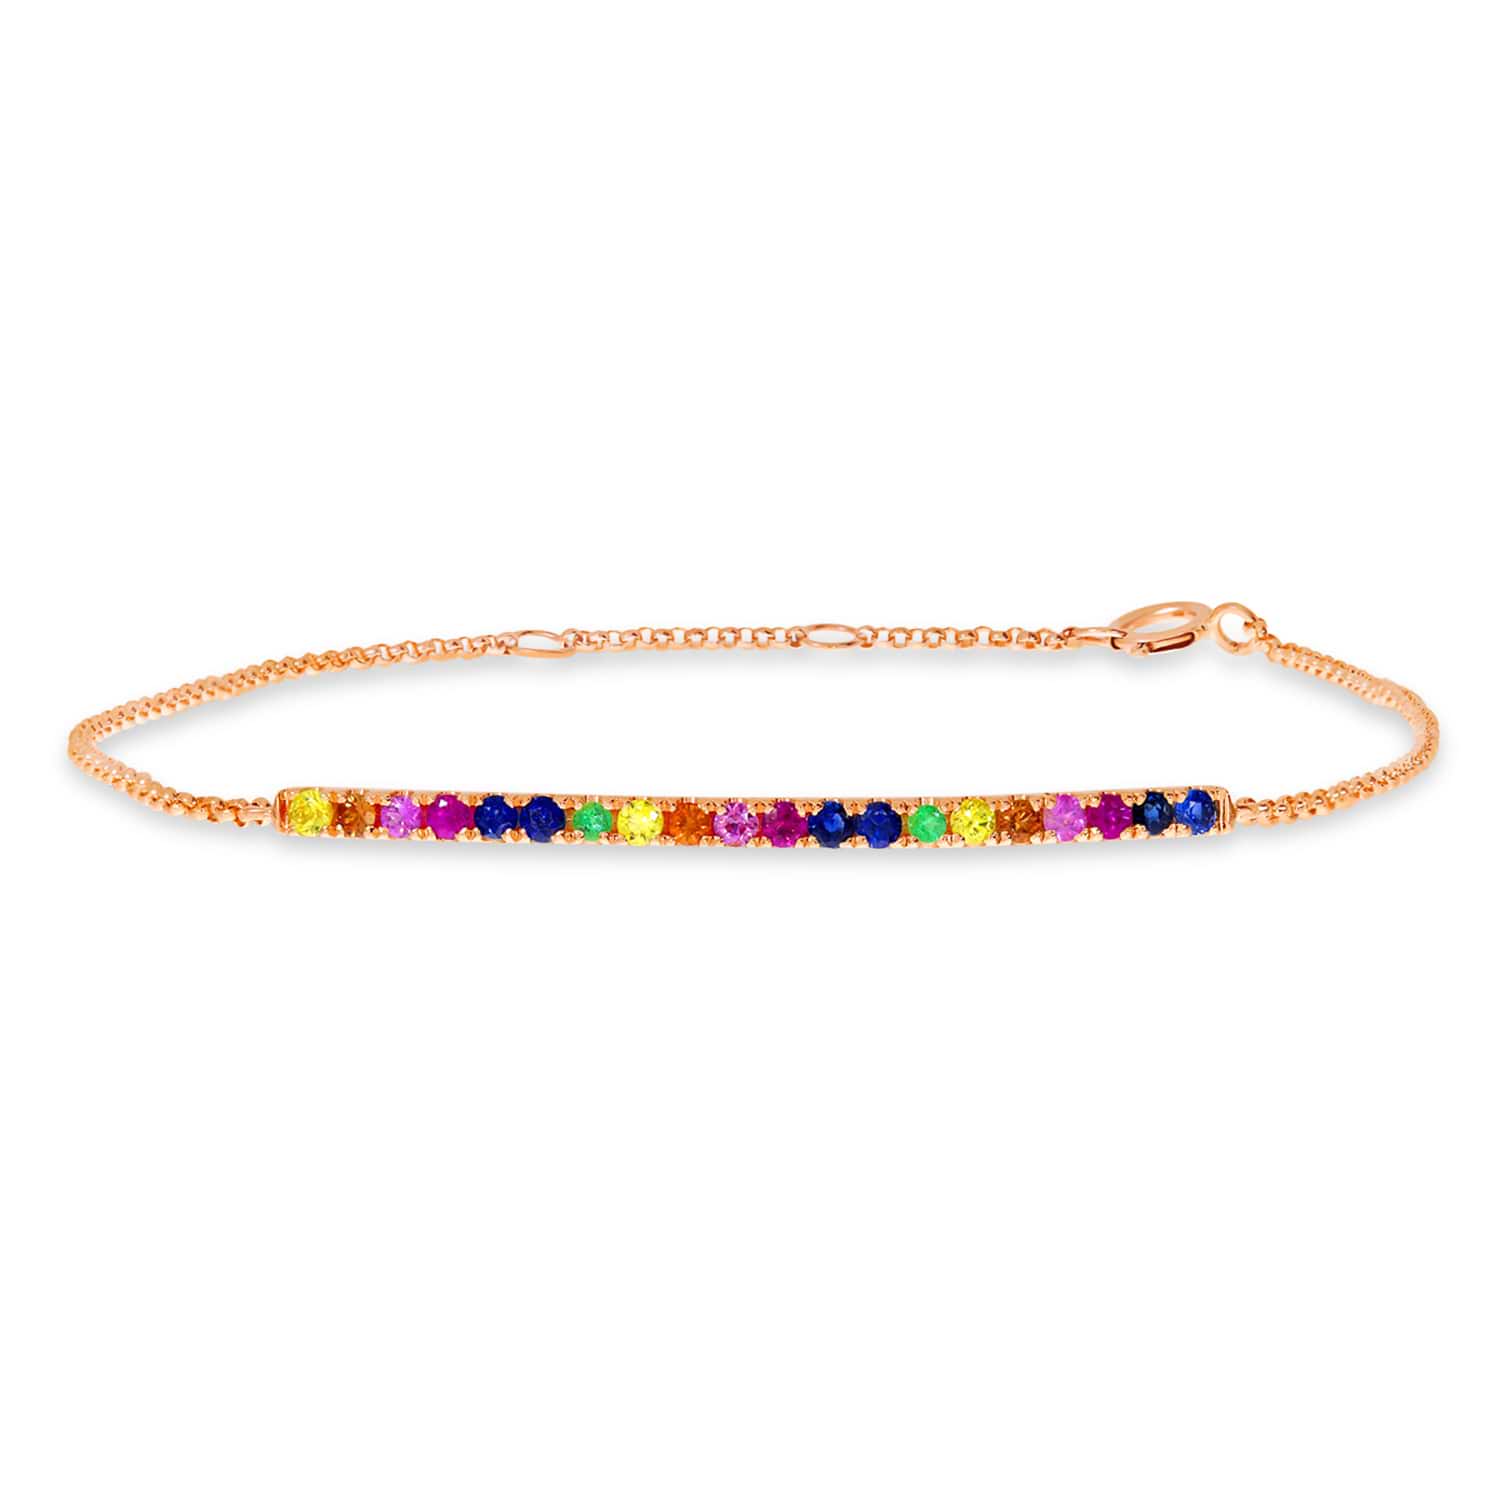 Rainbow Sapphire Chain Bracelet 14K Rose Gold (0.52ct)